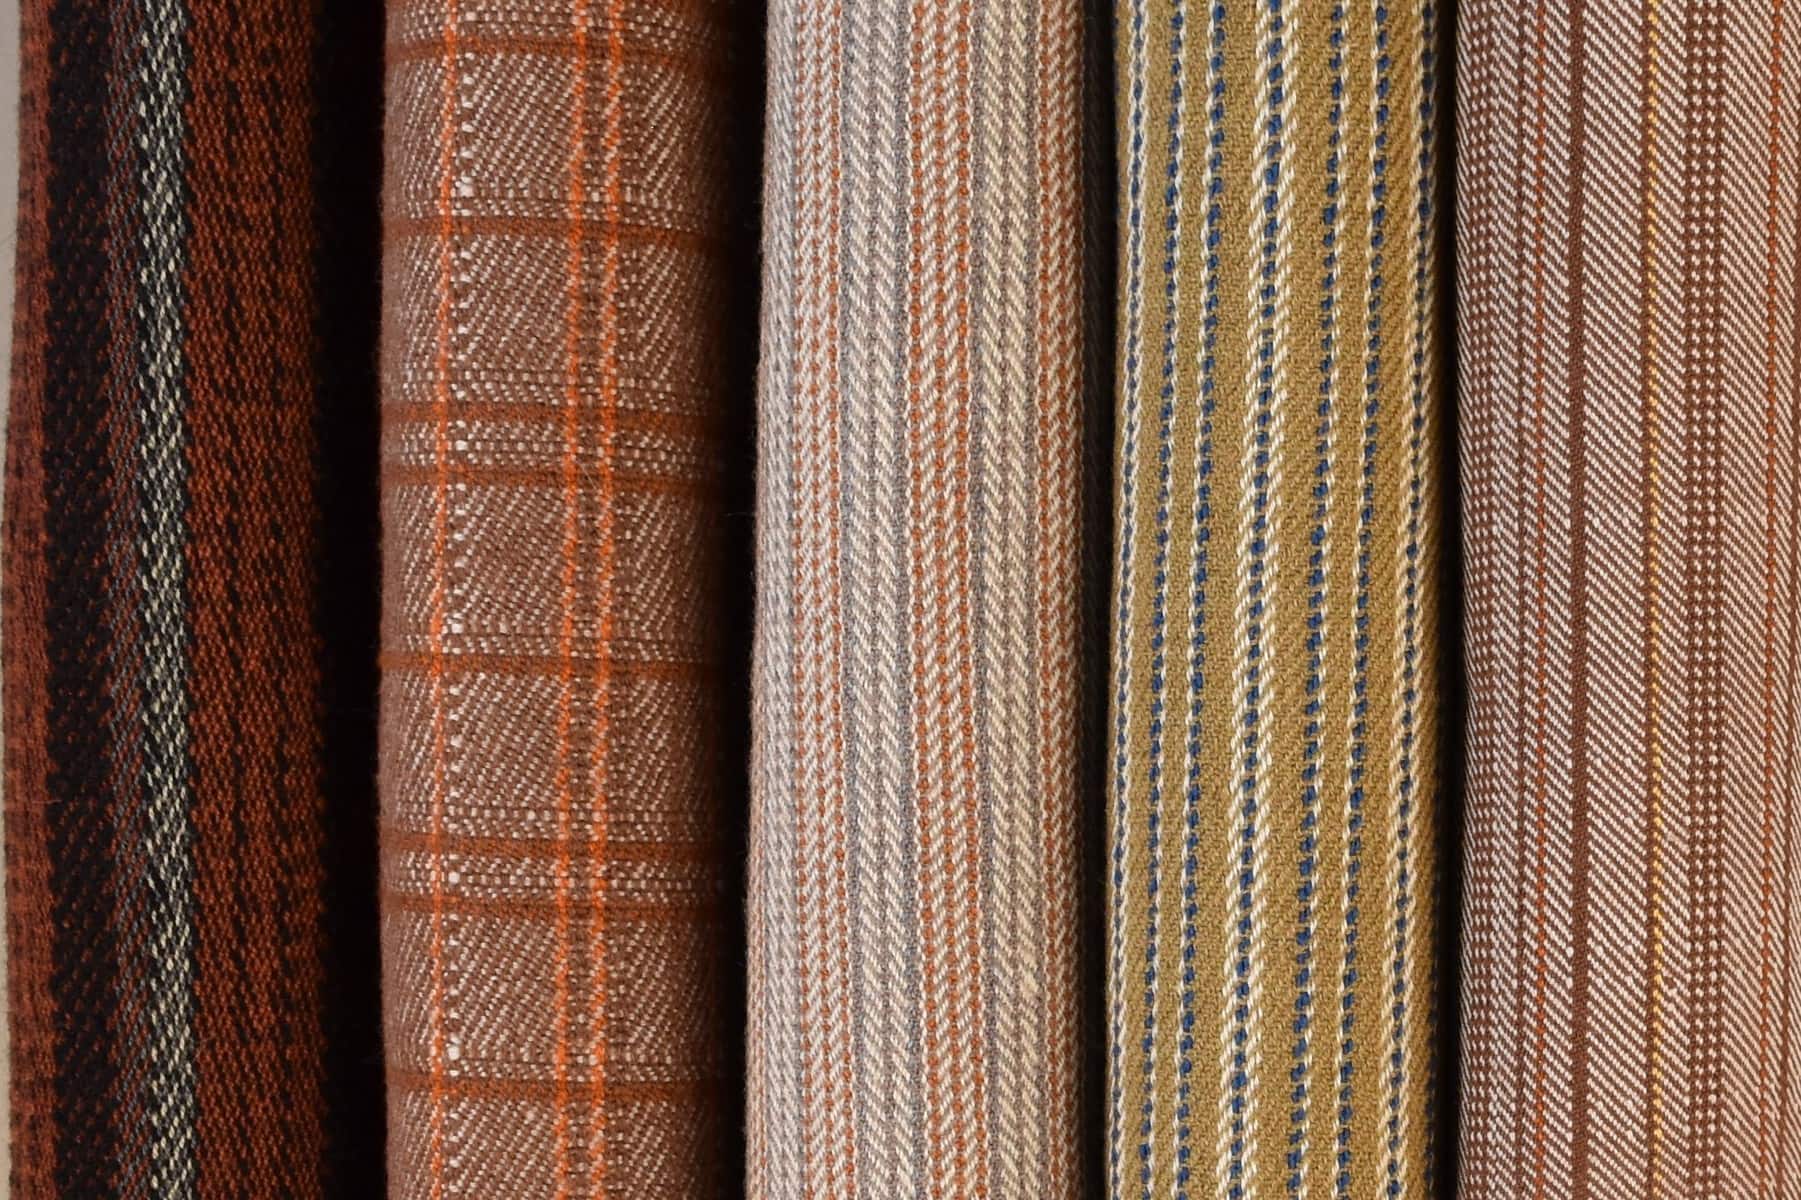 image description: samples of handwoven fabric